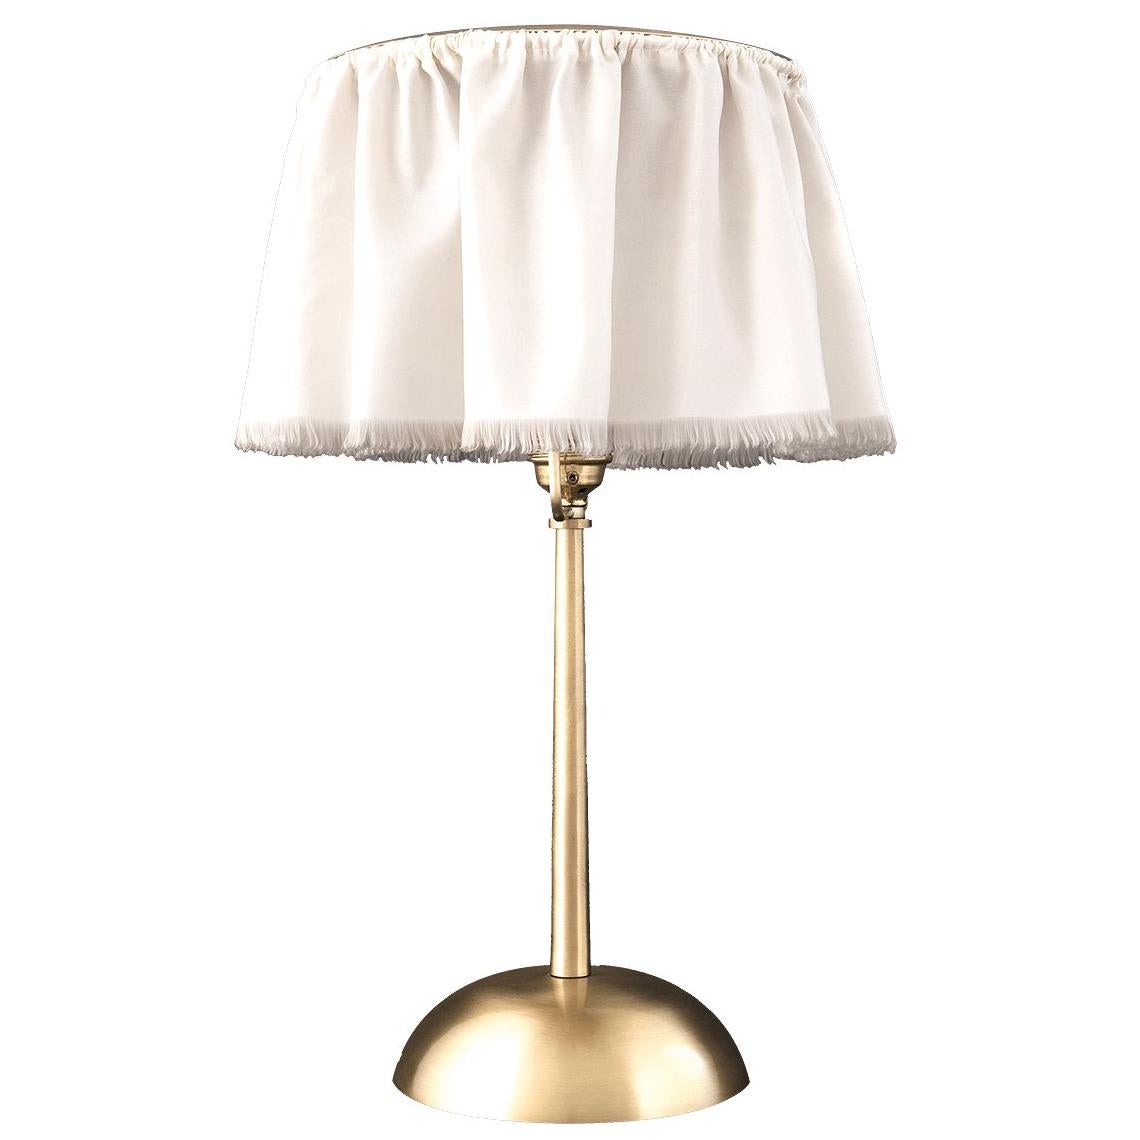 Josef Hoffmann / Wiener Werkstätte Jugendstil/ Art Nouveau Table Lamp Re-Edition For Sale